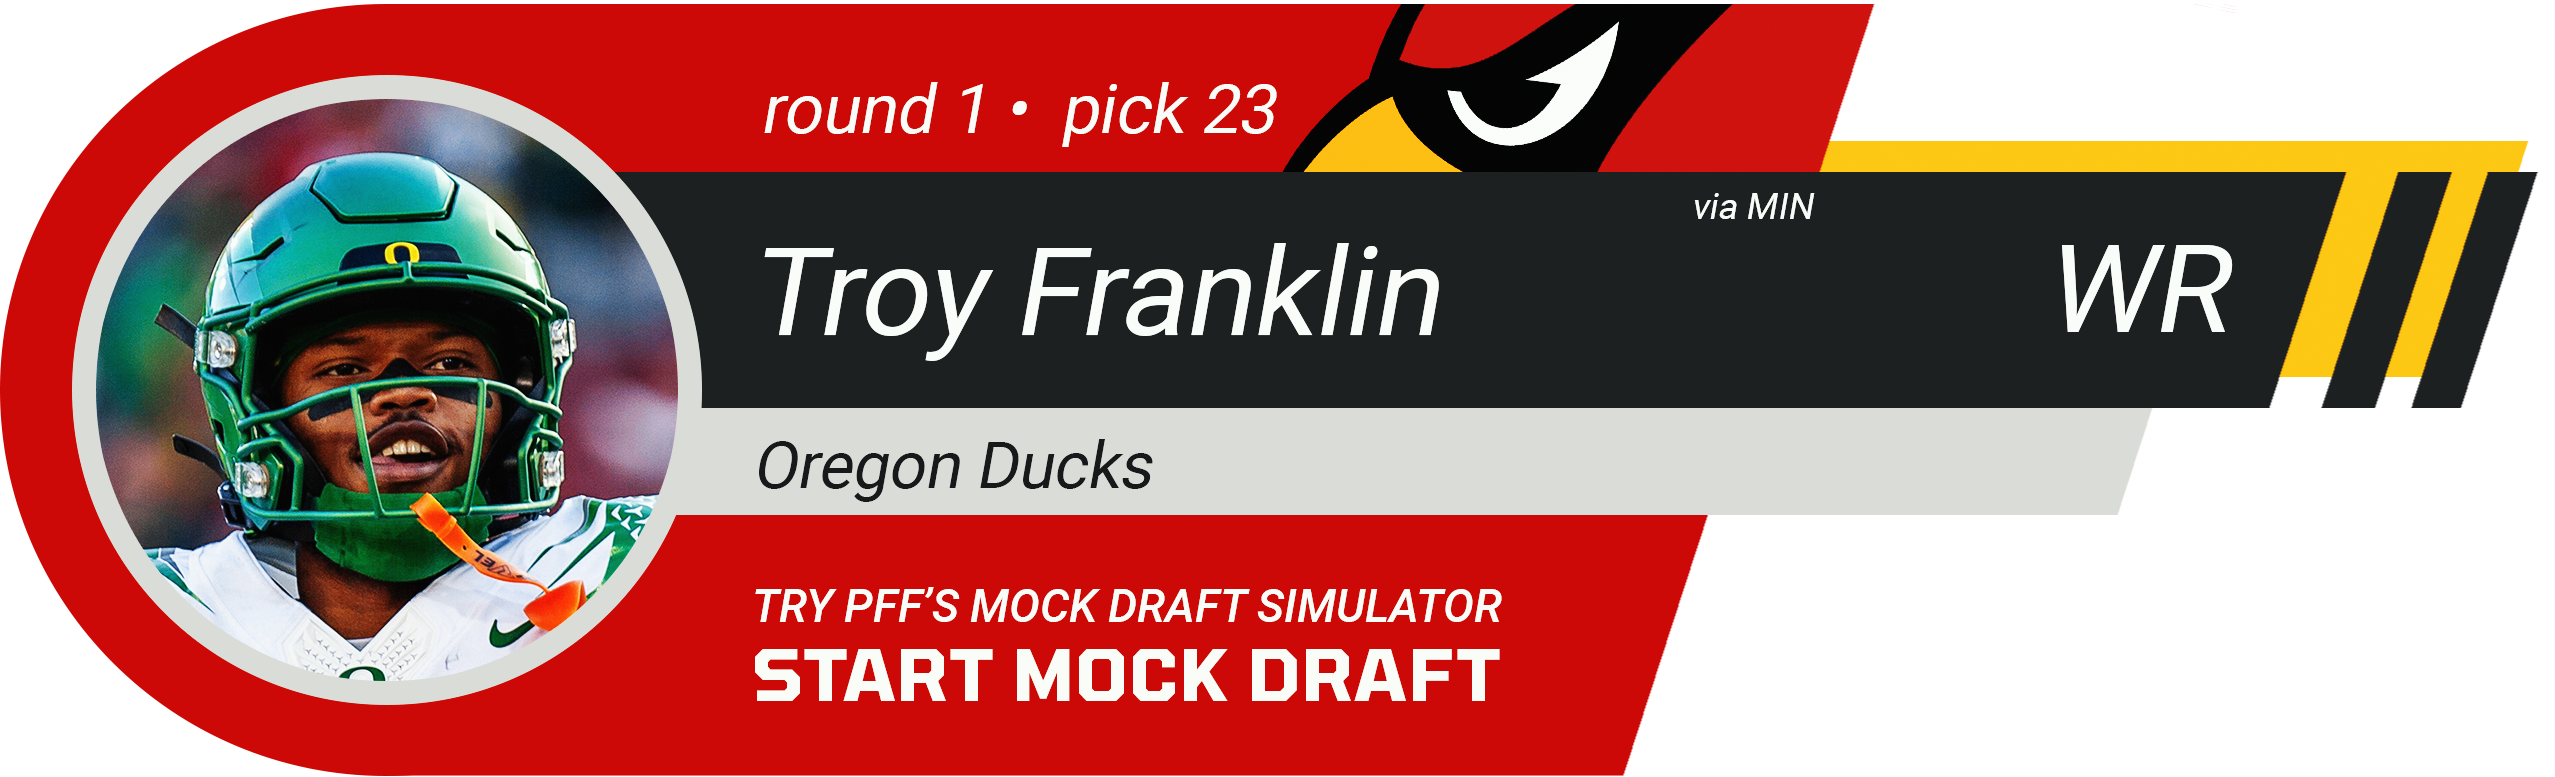 23. Arizona Cardinals: WR Troy Franklin, Oregon